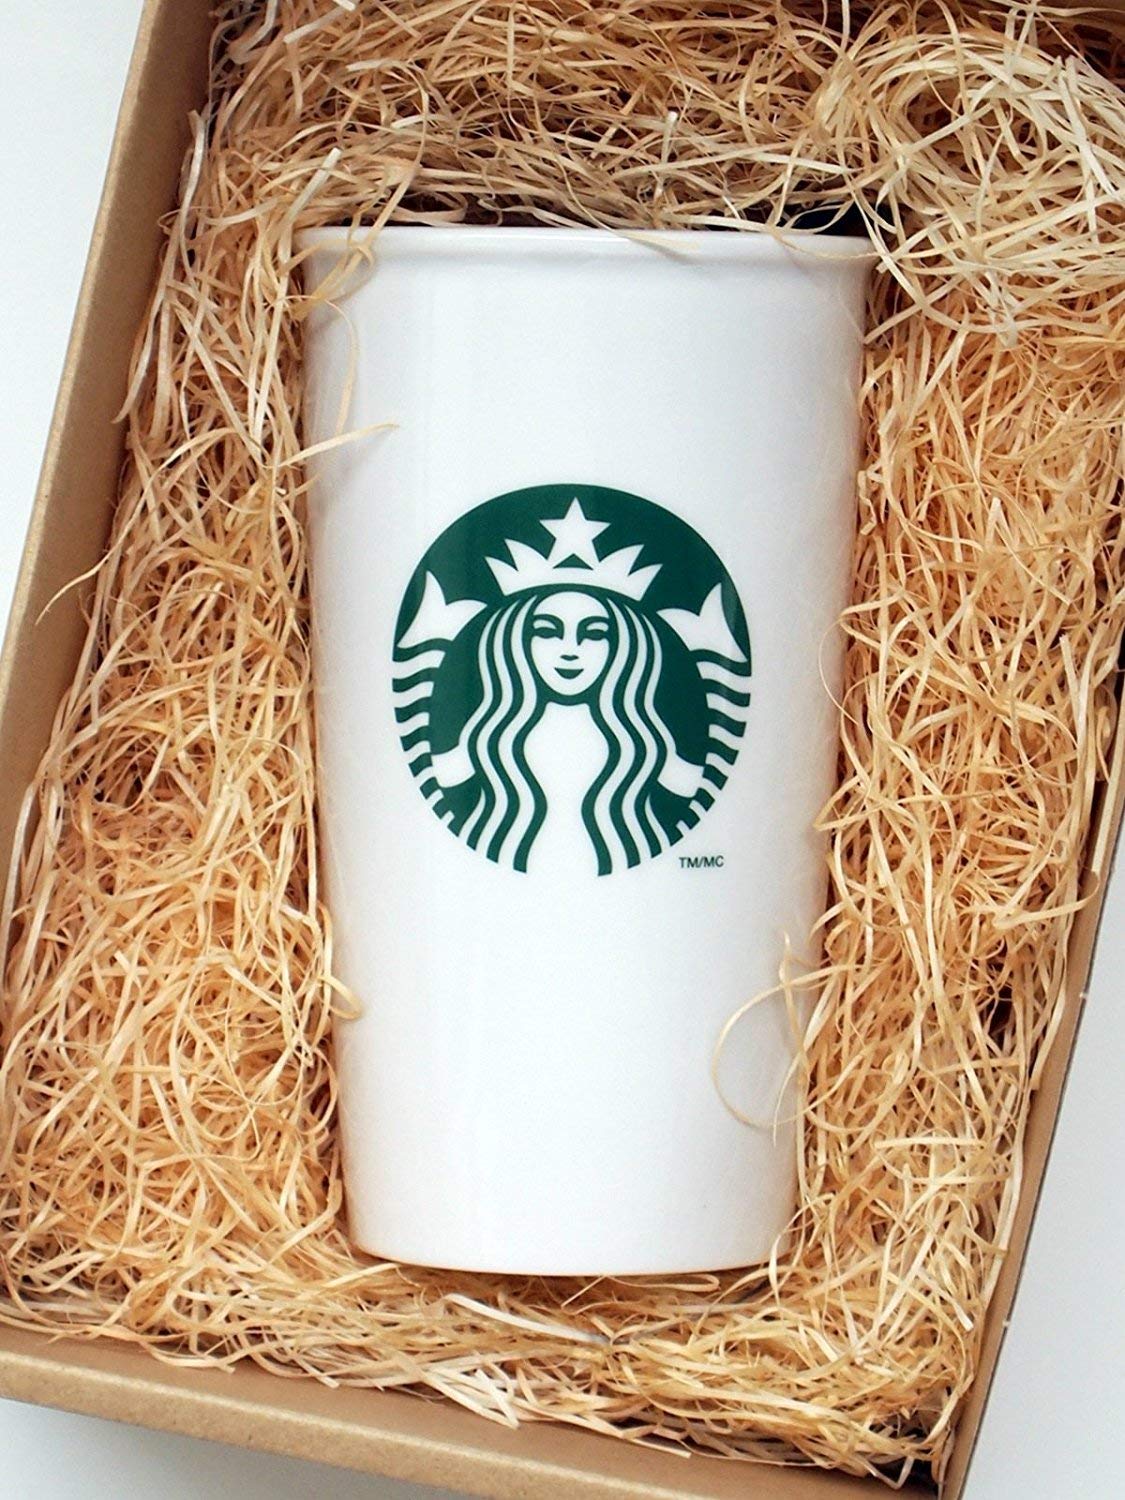 Top Best Starbucks Coffee Travel Mugs of 2020 Buyer